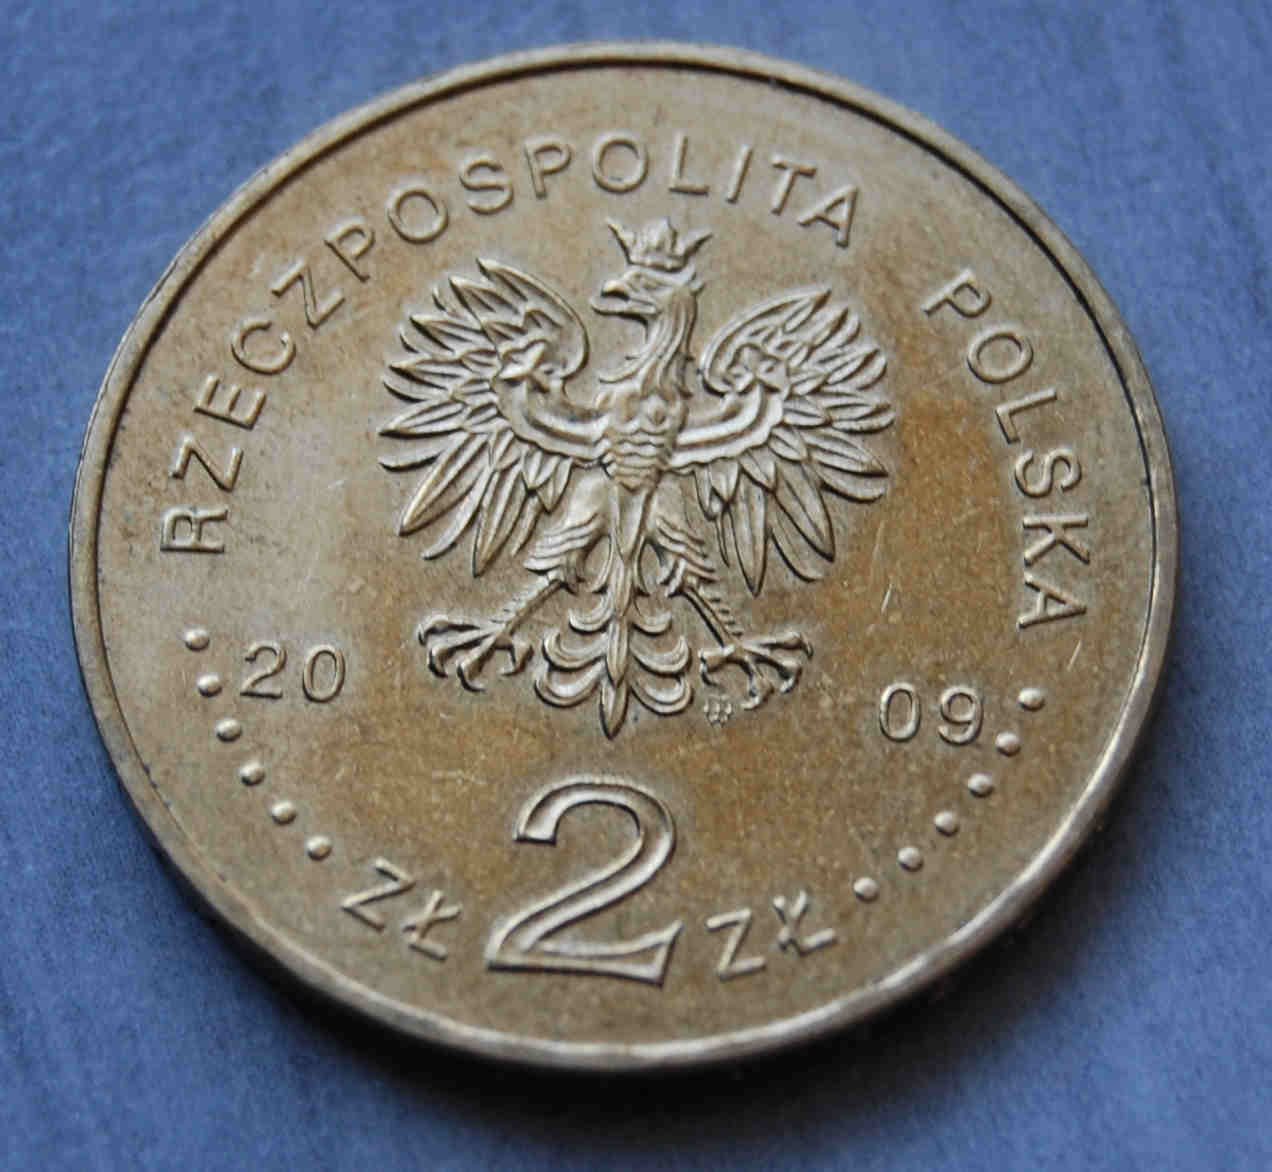  Polen  2 Zloty 2009 Y # 675 stgl. Central Banking   